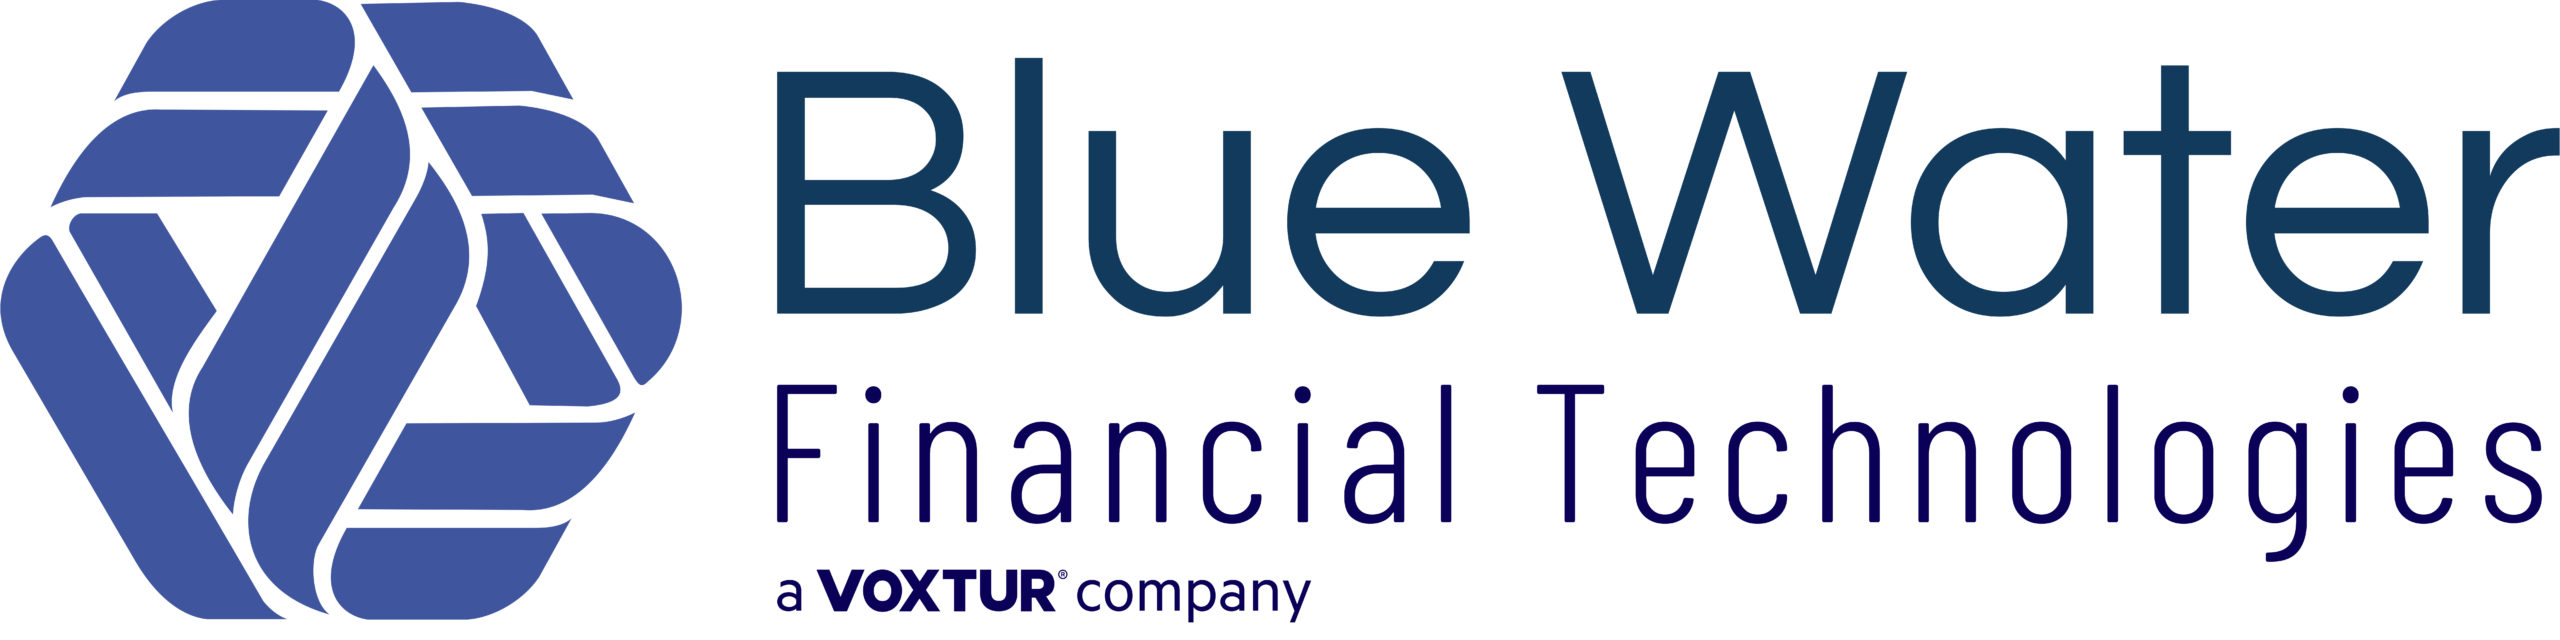 Blue Water Financial Technologies